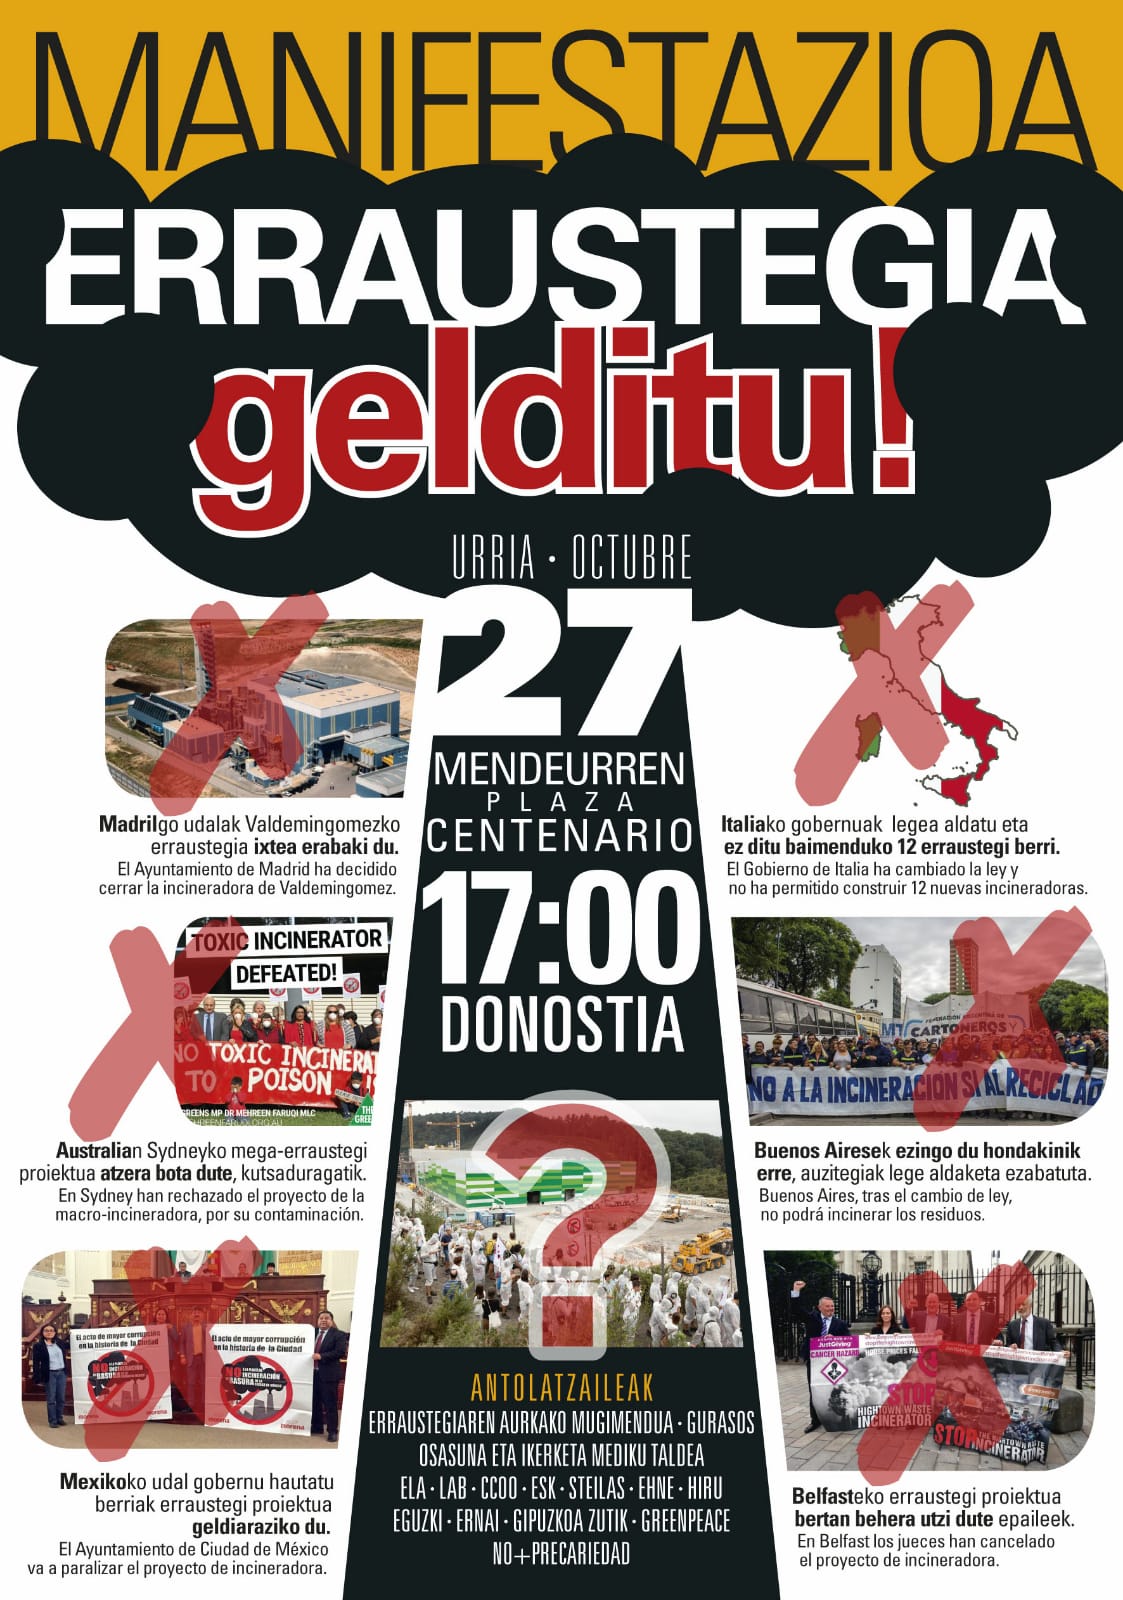 Organizado por varios agentes sociales de Gipuzkoa, el 27 de octubre manifestación en Donostia: «Erraustegia gelditu!»